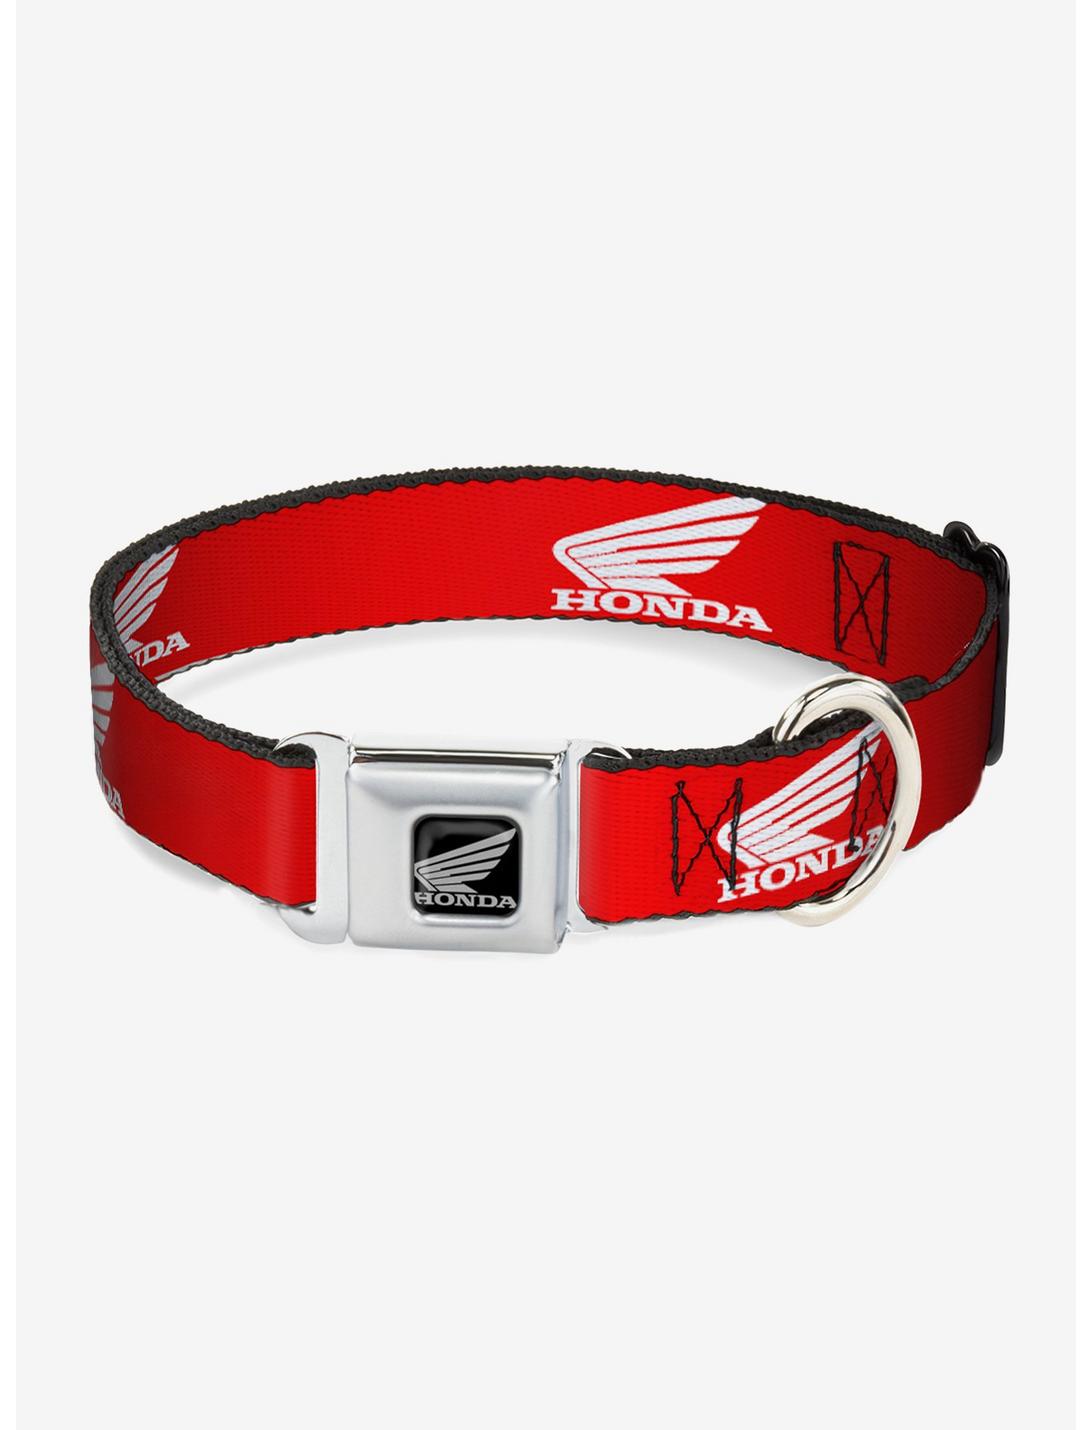 Honda Motorcycle Logo Red White Seatbelt Buckle Dog Collar, RED, hi-res